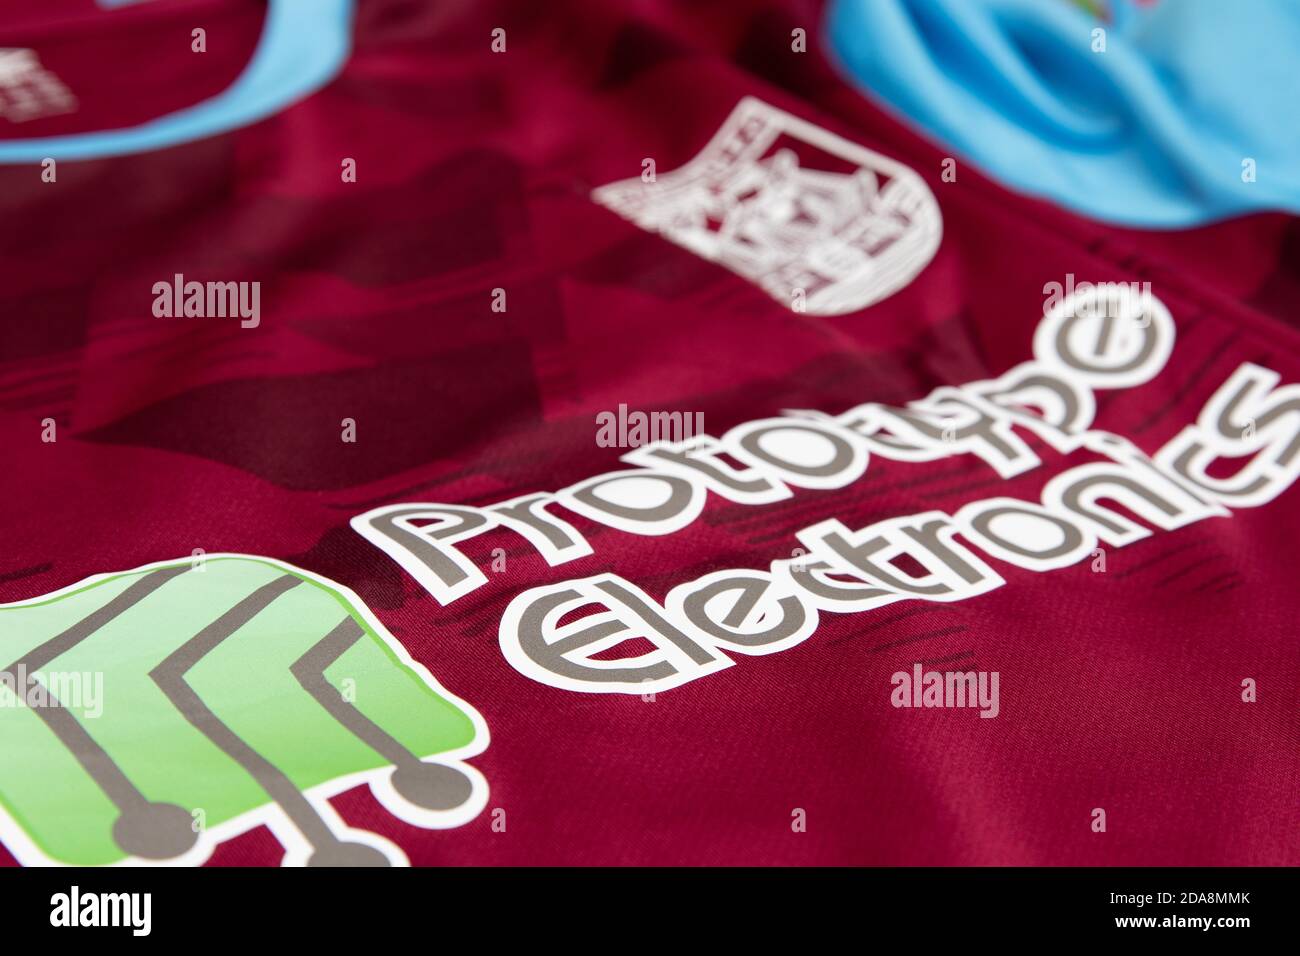 Prototyp Electronics Vorderseite des T-Shirts Sponsorenlogo auf dem Weymouth FC Frauen Team Heimtrikot. Stockfoto